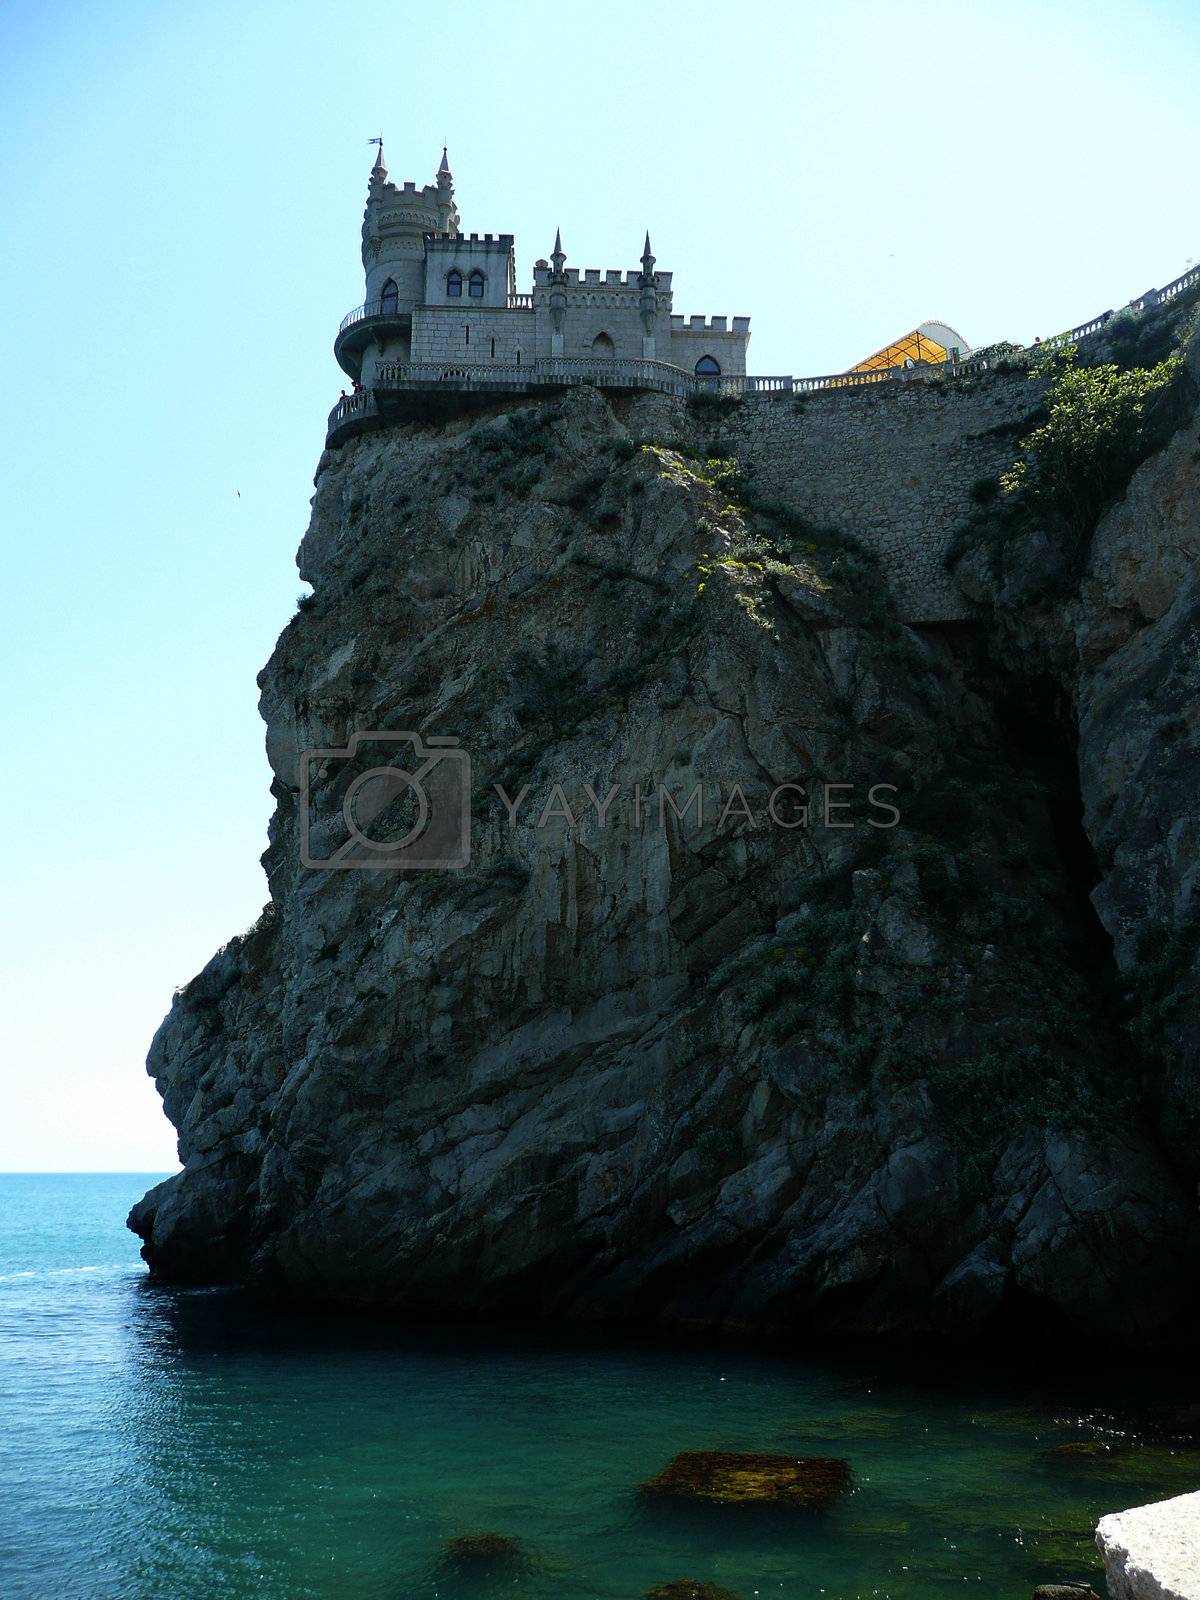 Royalty free image of Swallow's Nest, Scenic Castle over the Black Sea, Yalta, Crimea, by marcorubino